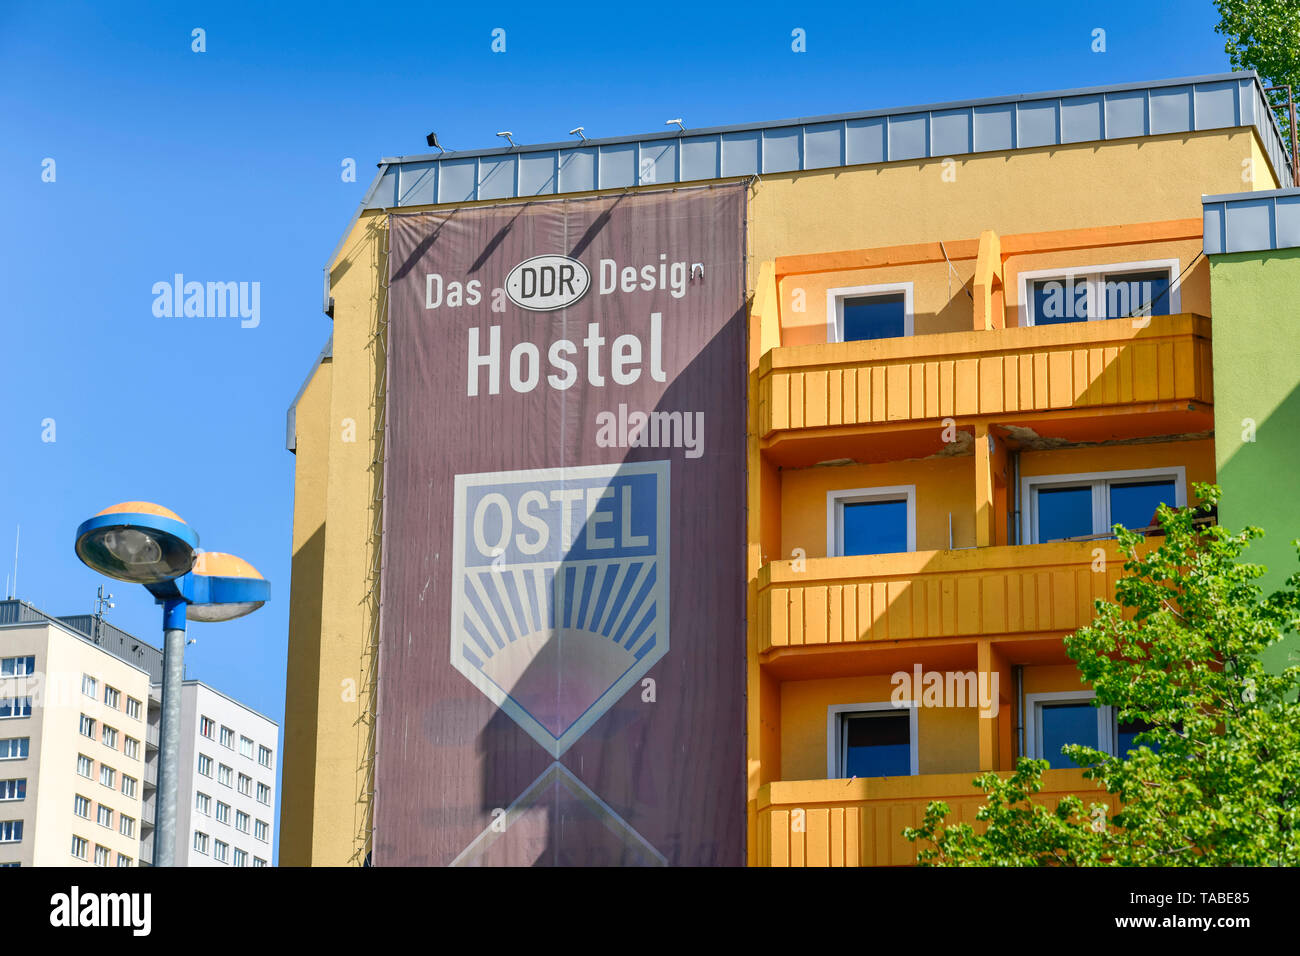 Hostel Ostel, strada di Parigi autorità locale distretto, Friedrich di grove, Berlino, Germania, Strasse der Pariser Kommune, Friedrichshain, Deutschla Foto Stock